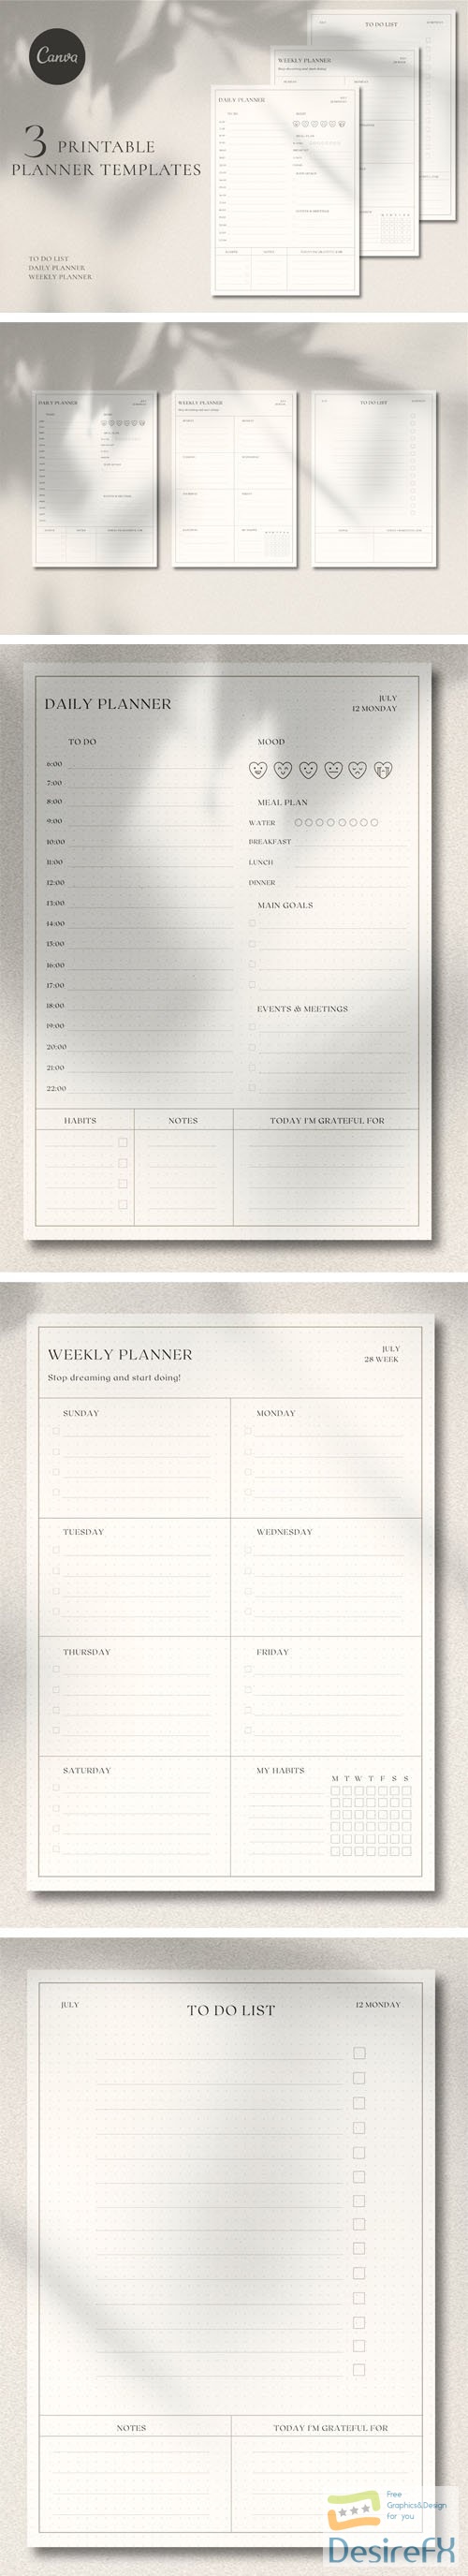 3 Printable Planner Templates